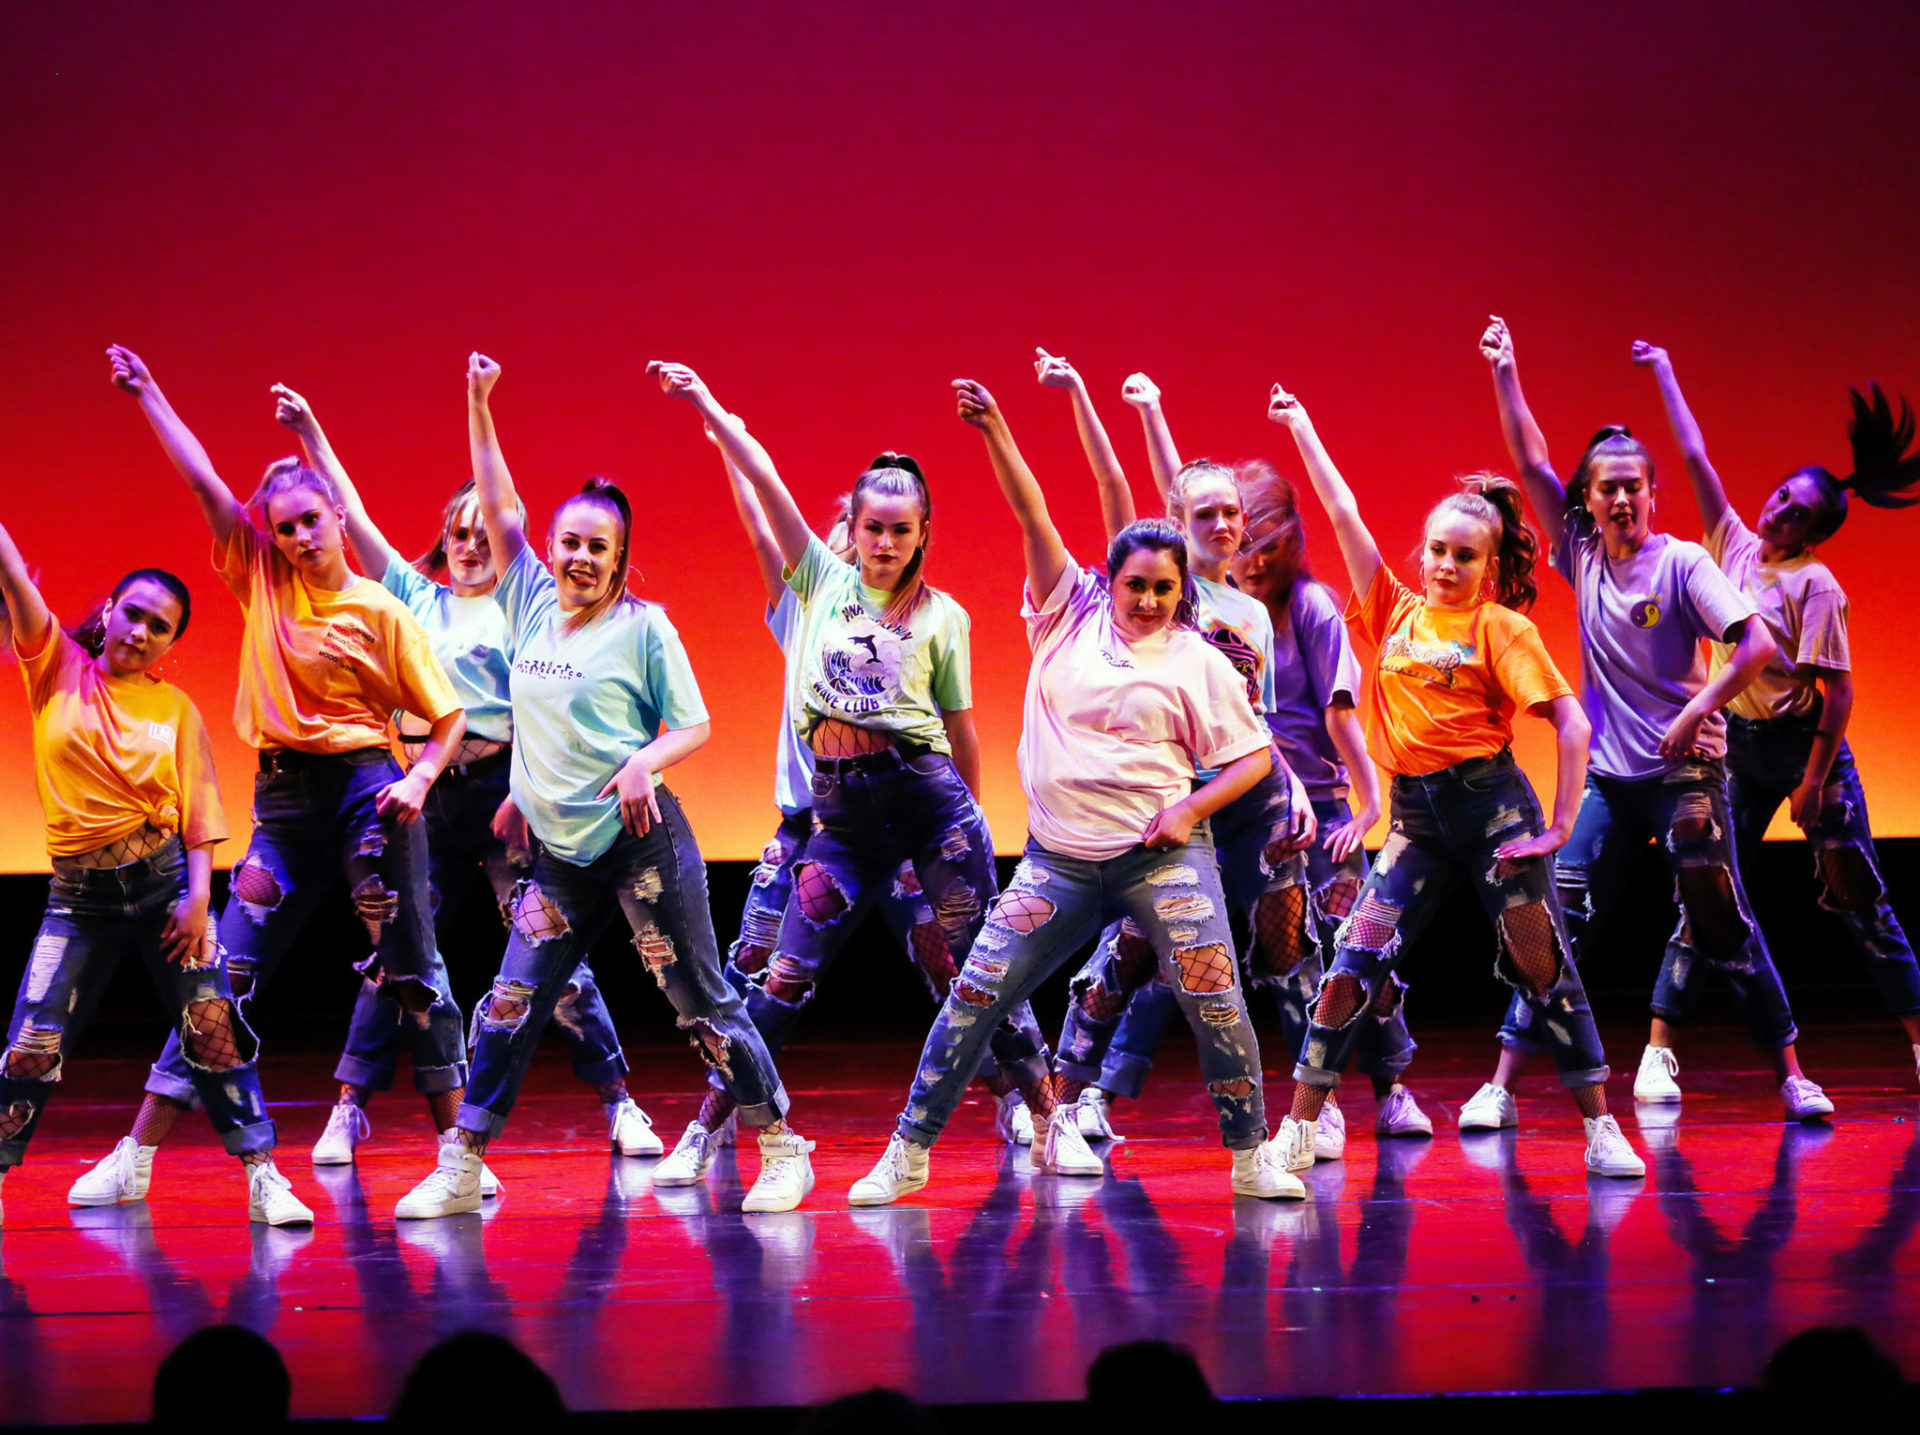 Styles of Dance – The Dance Center of Santa Rosa